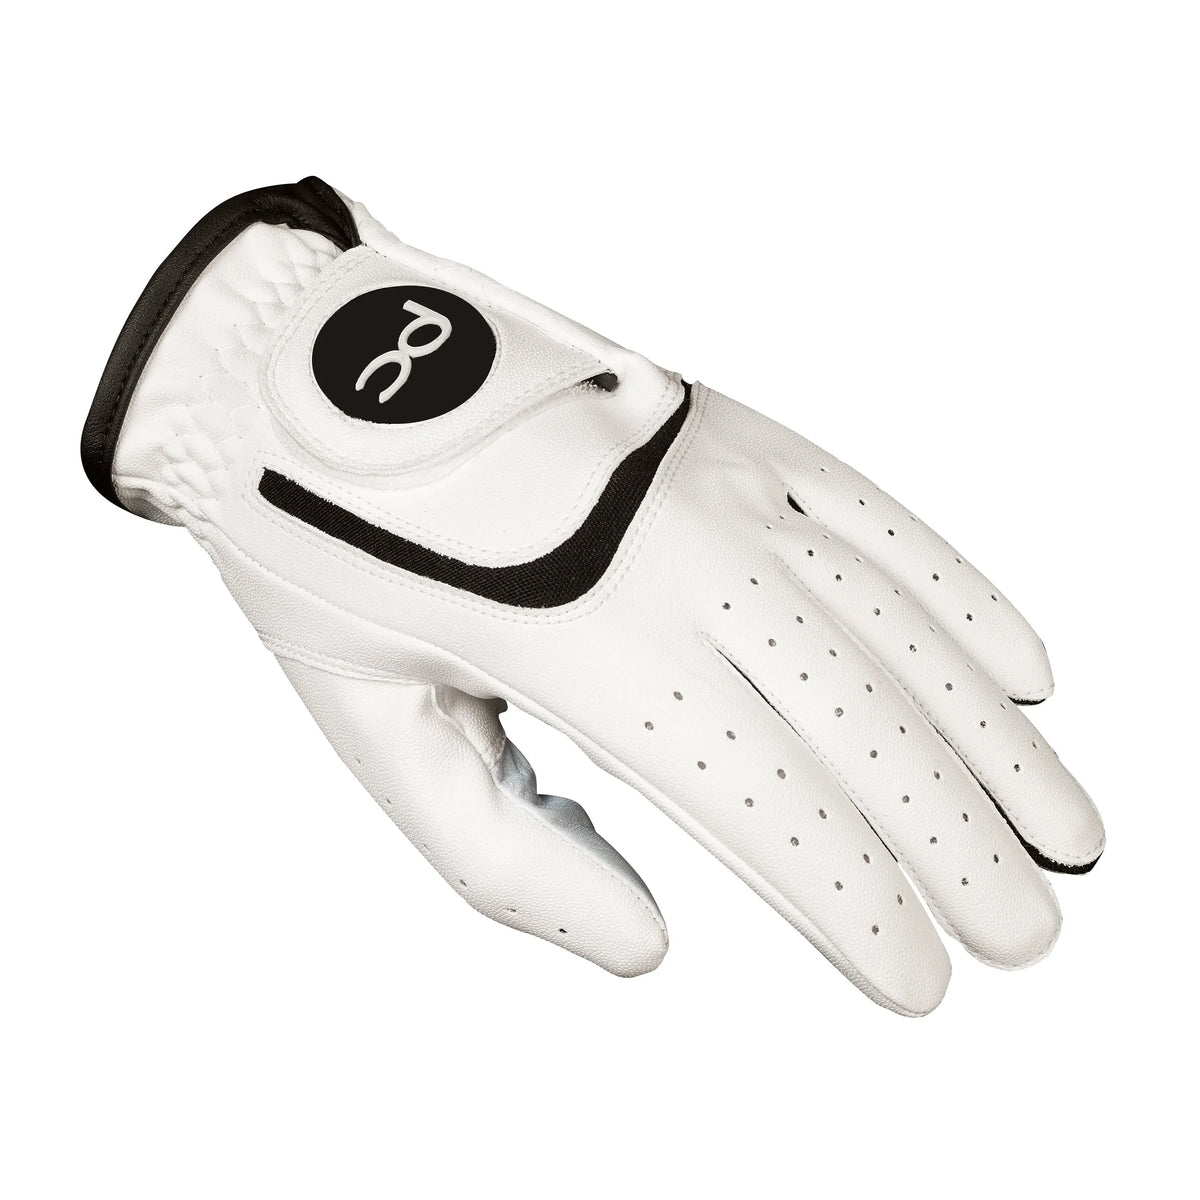 JUNIOR ALL WEATHER GLOVE - LEFT HAND (Right Handed Golfer) - WHITE/BLACK $20 sale